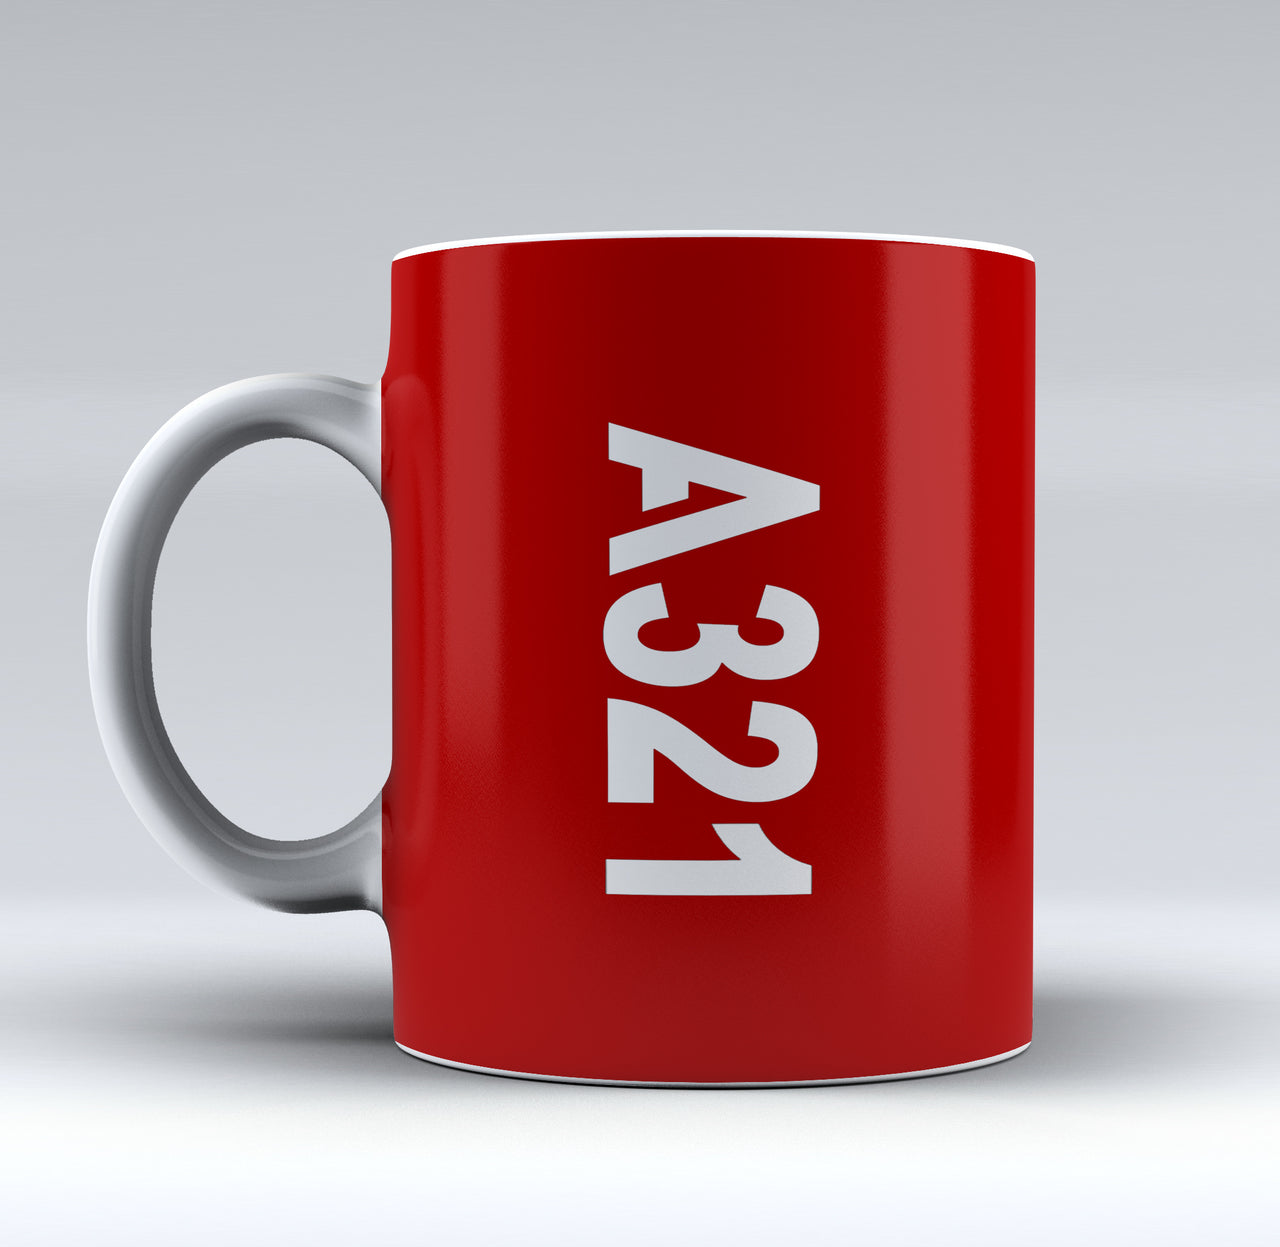 A321 Text Side Designed Mugs